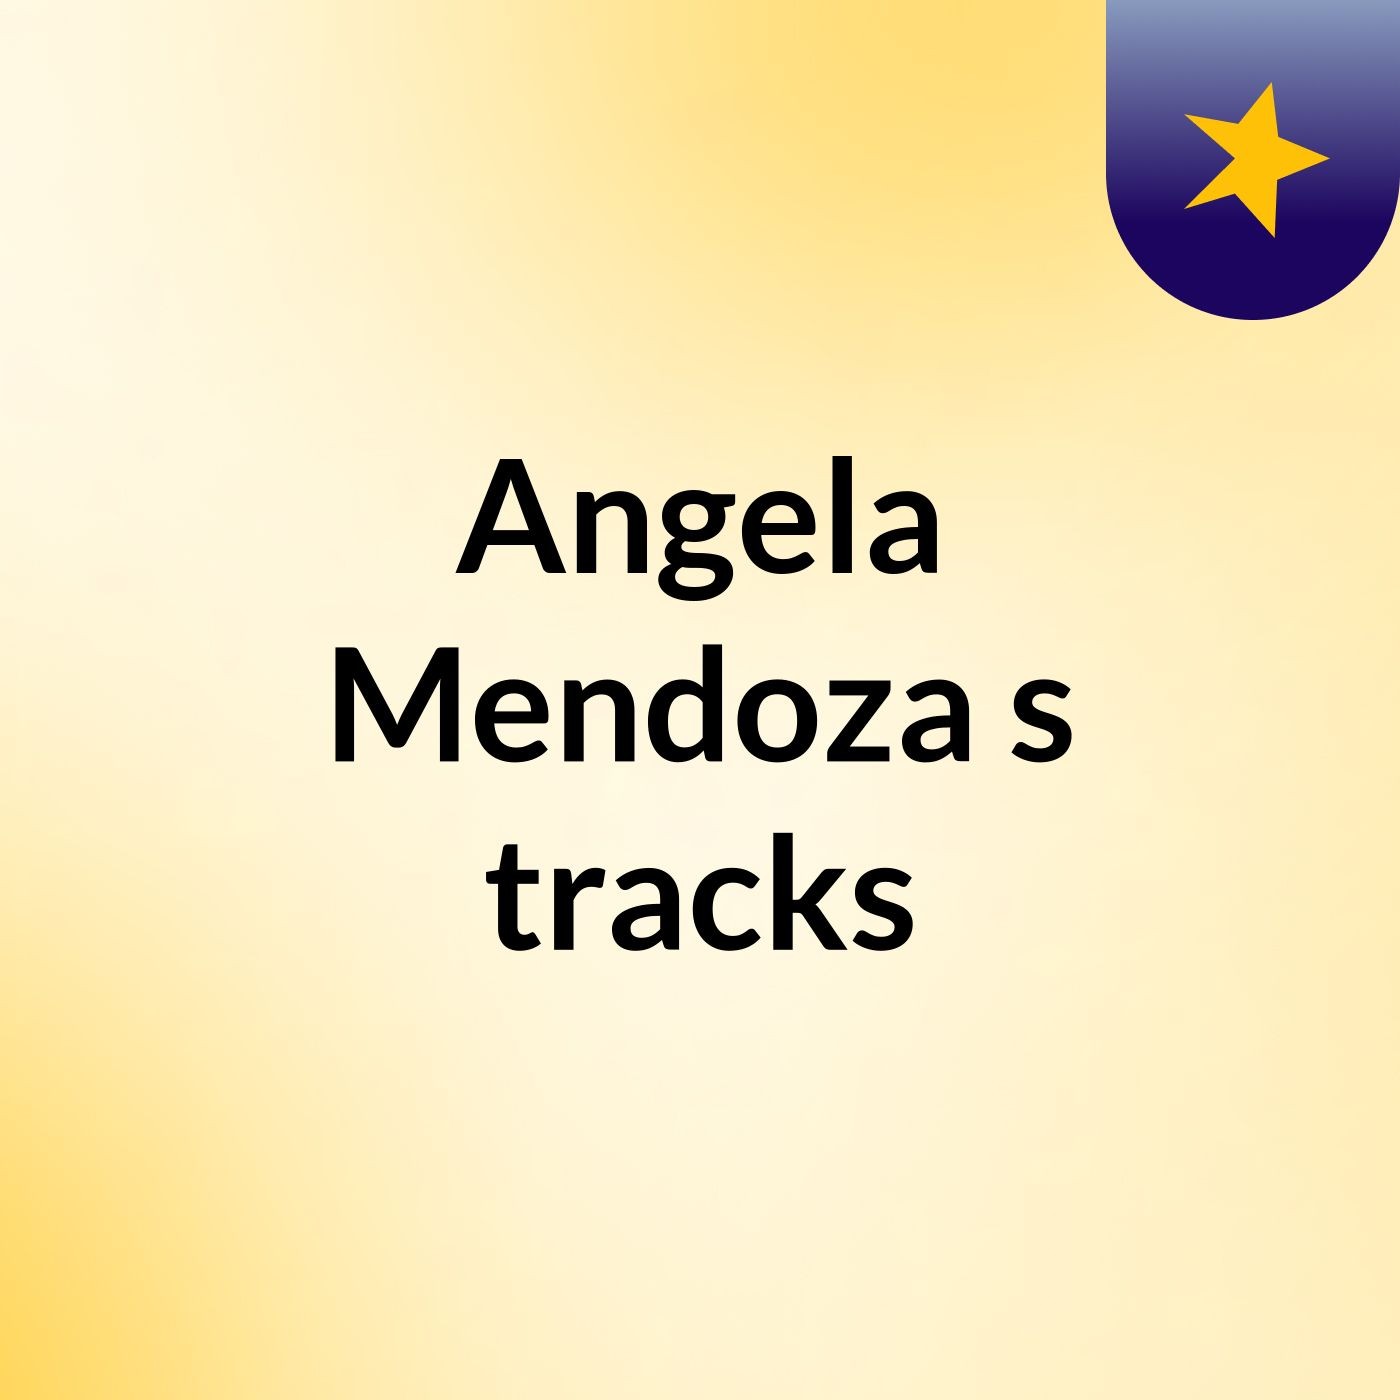 Angela Mendoza's tracks